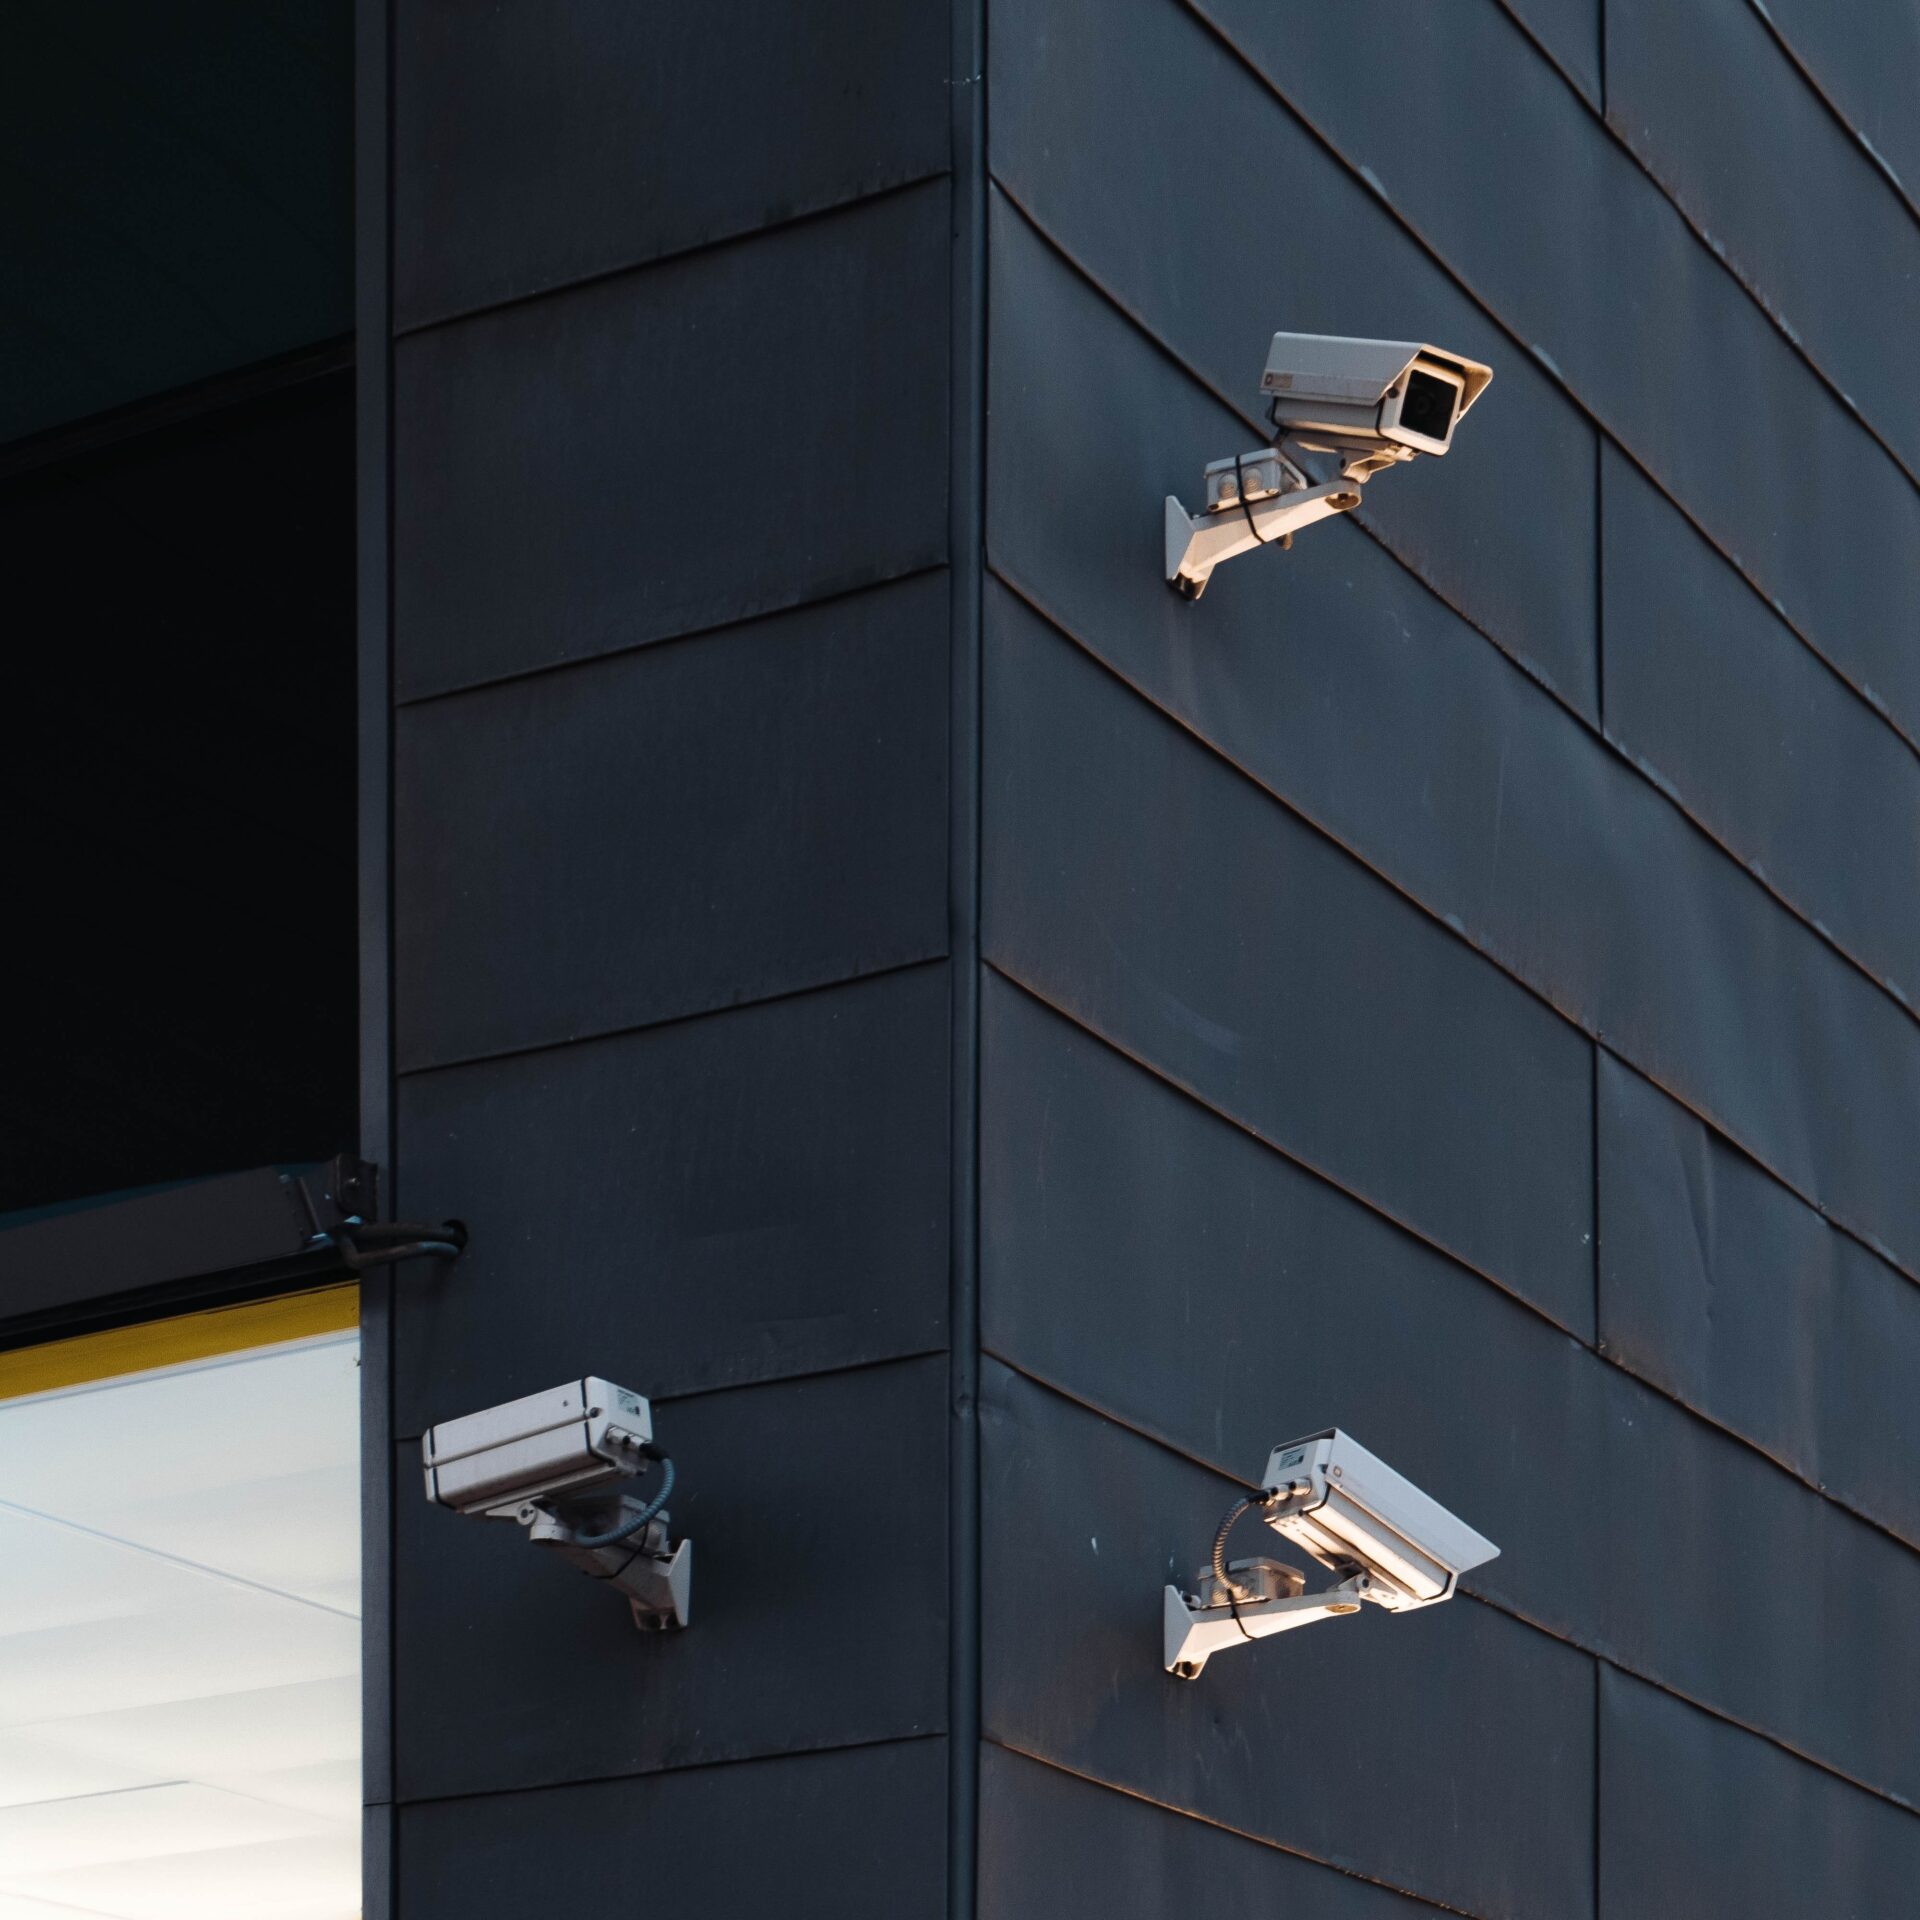 Three Commercial Video Surveillance